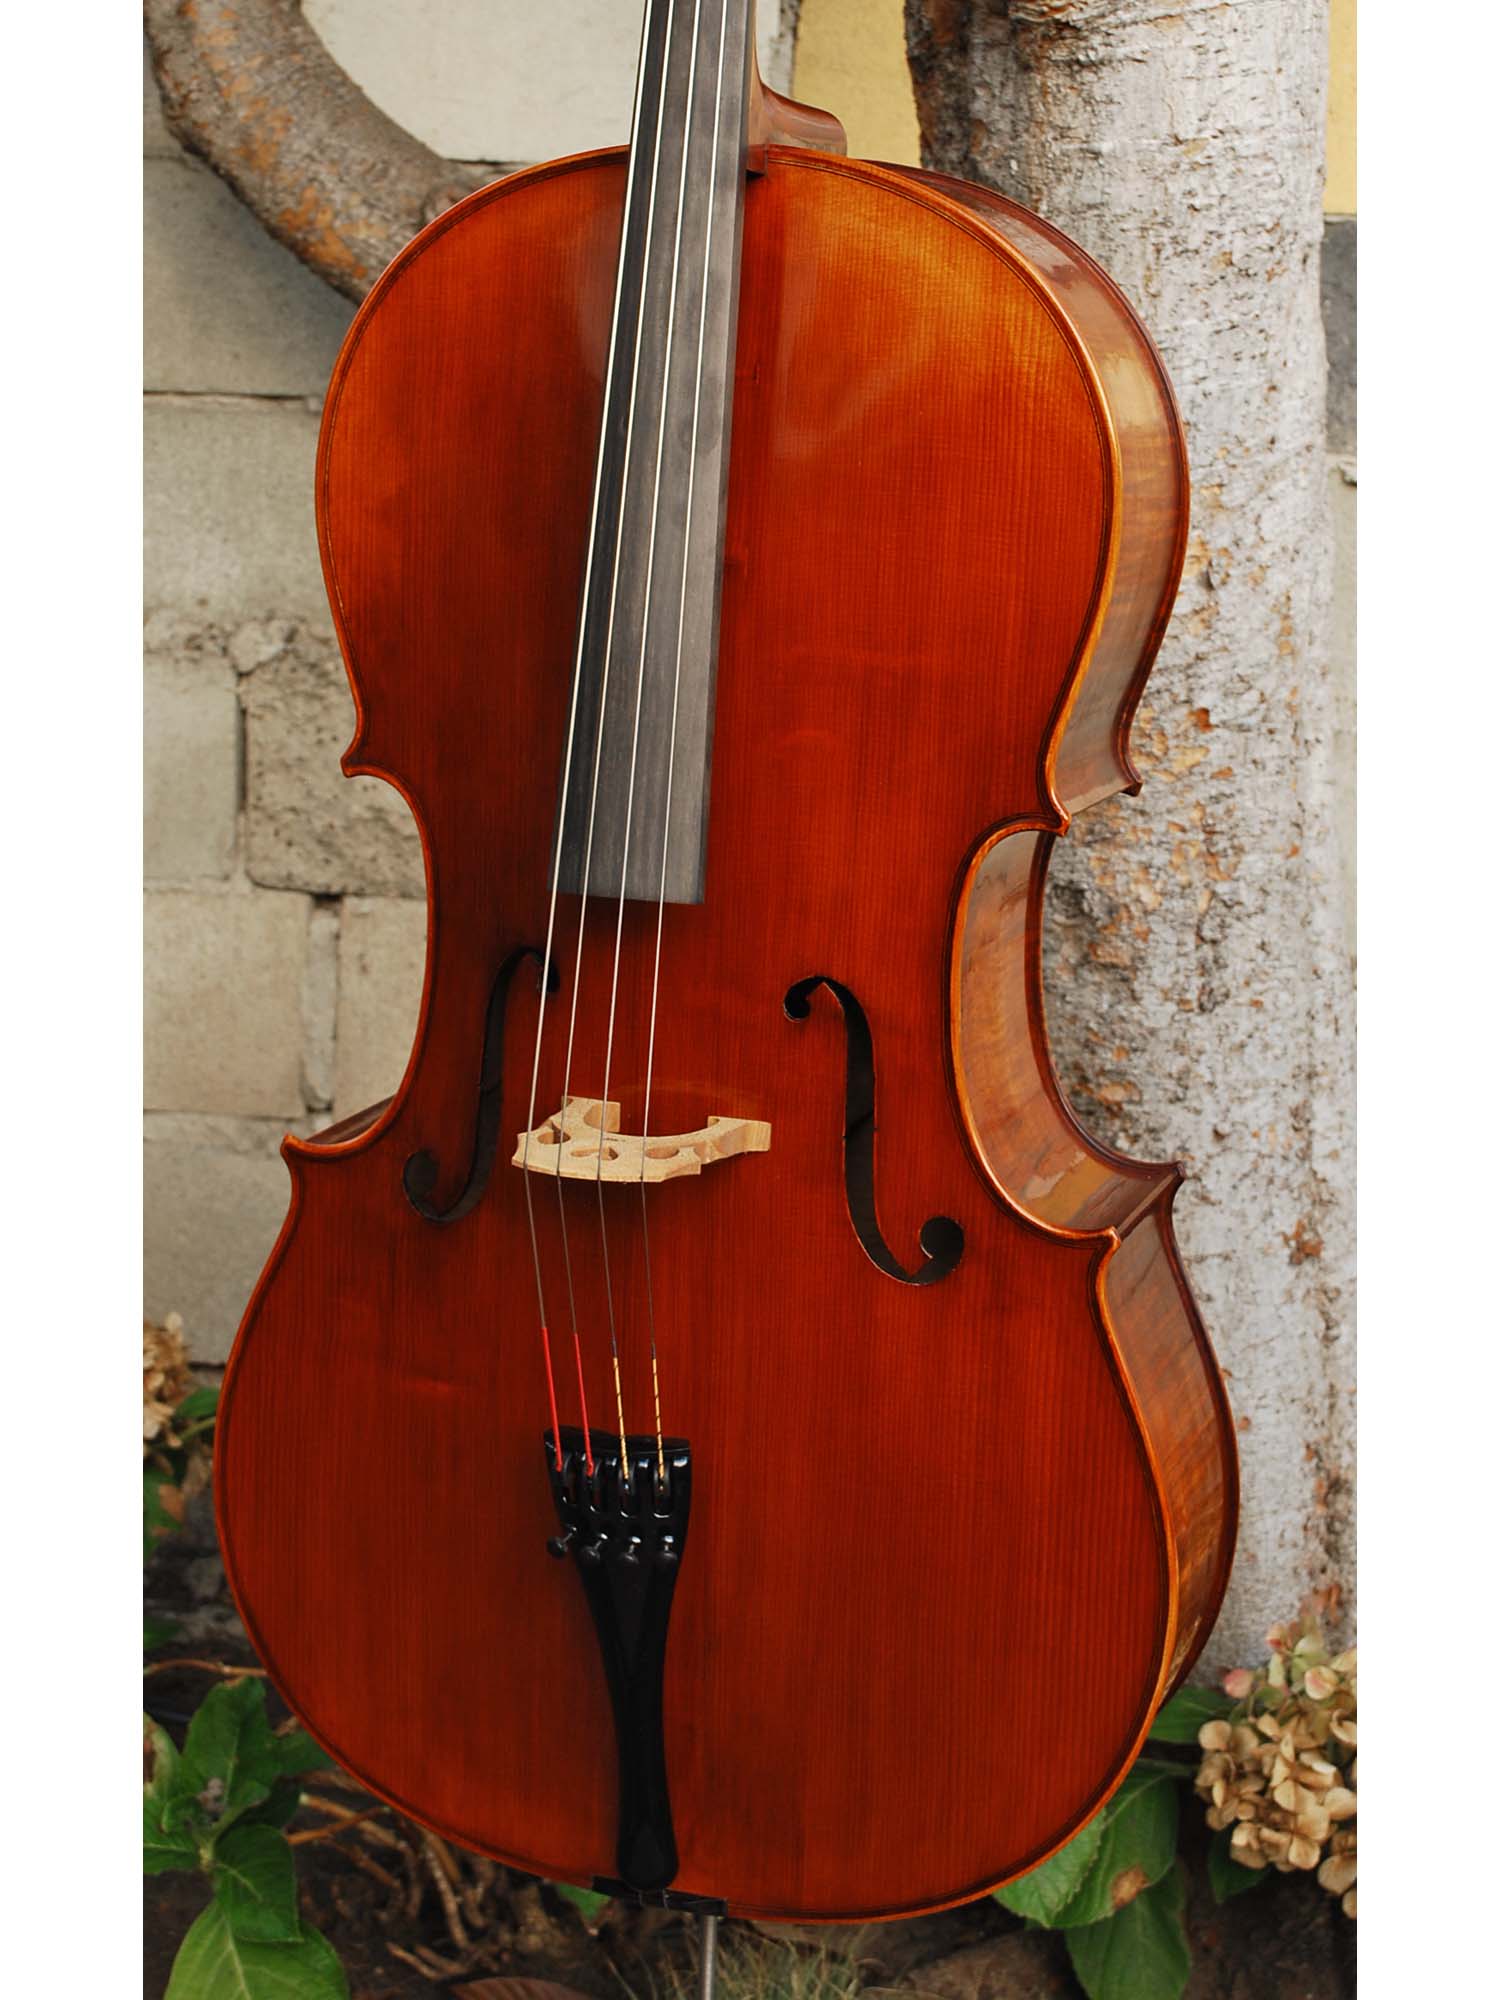 Angel Taylor model 320 7/8 Cello